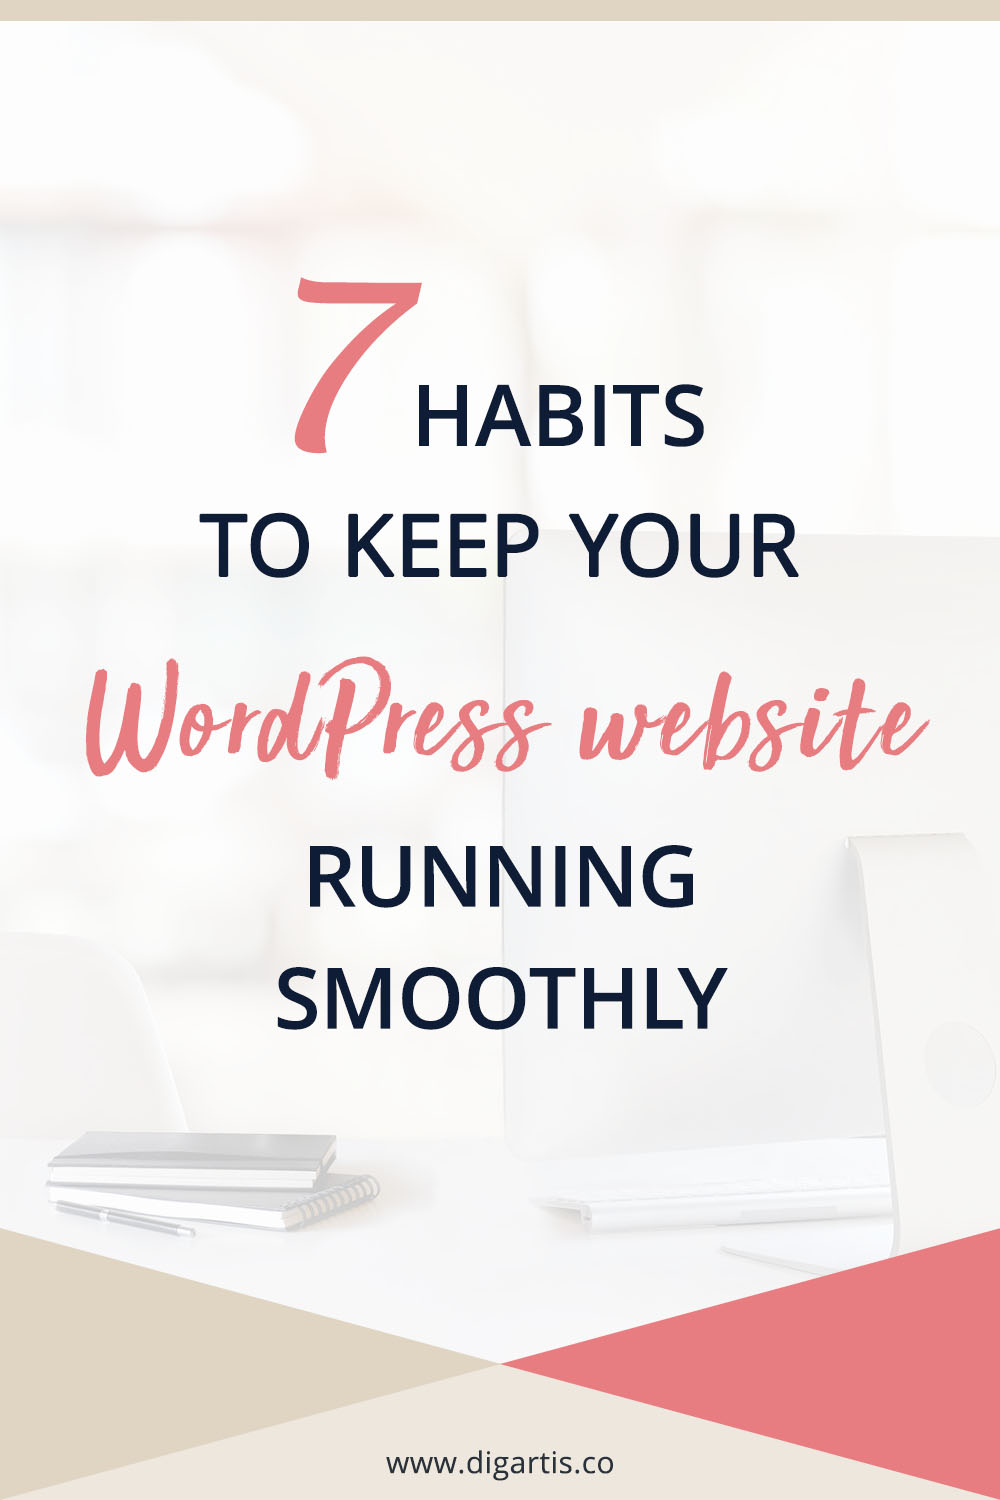 7 habits to keep your WordPress website running smoothly